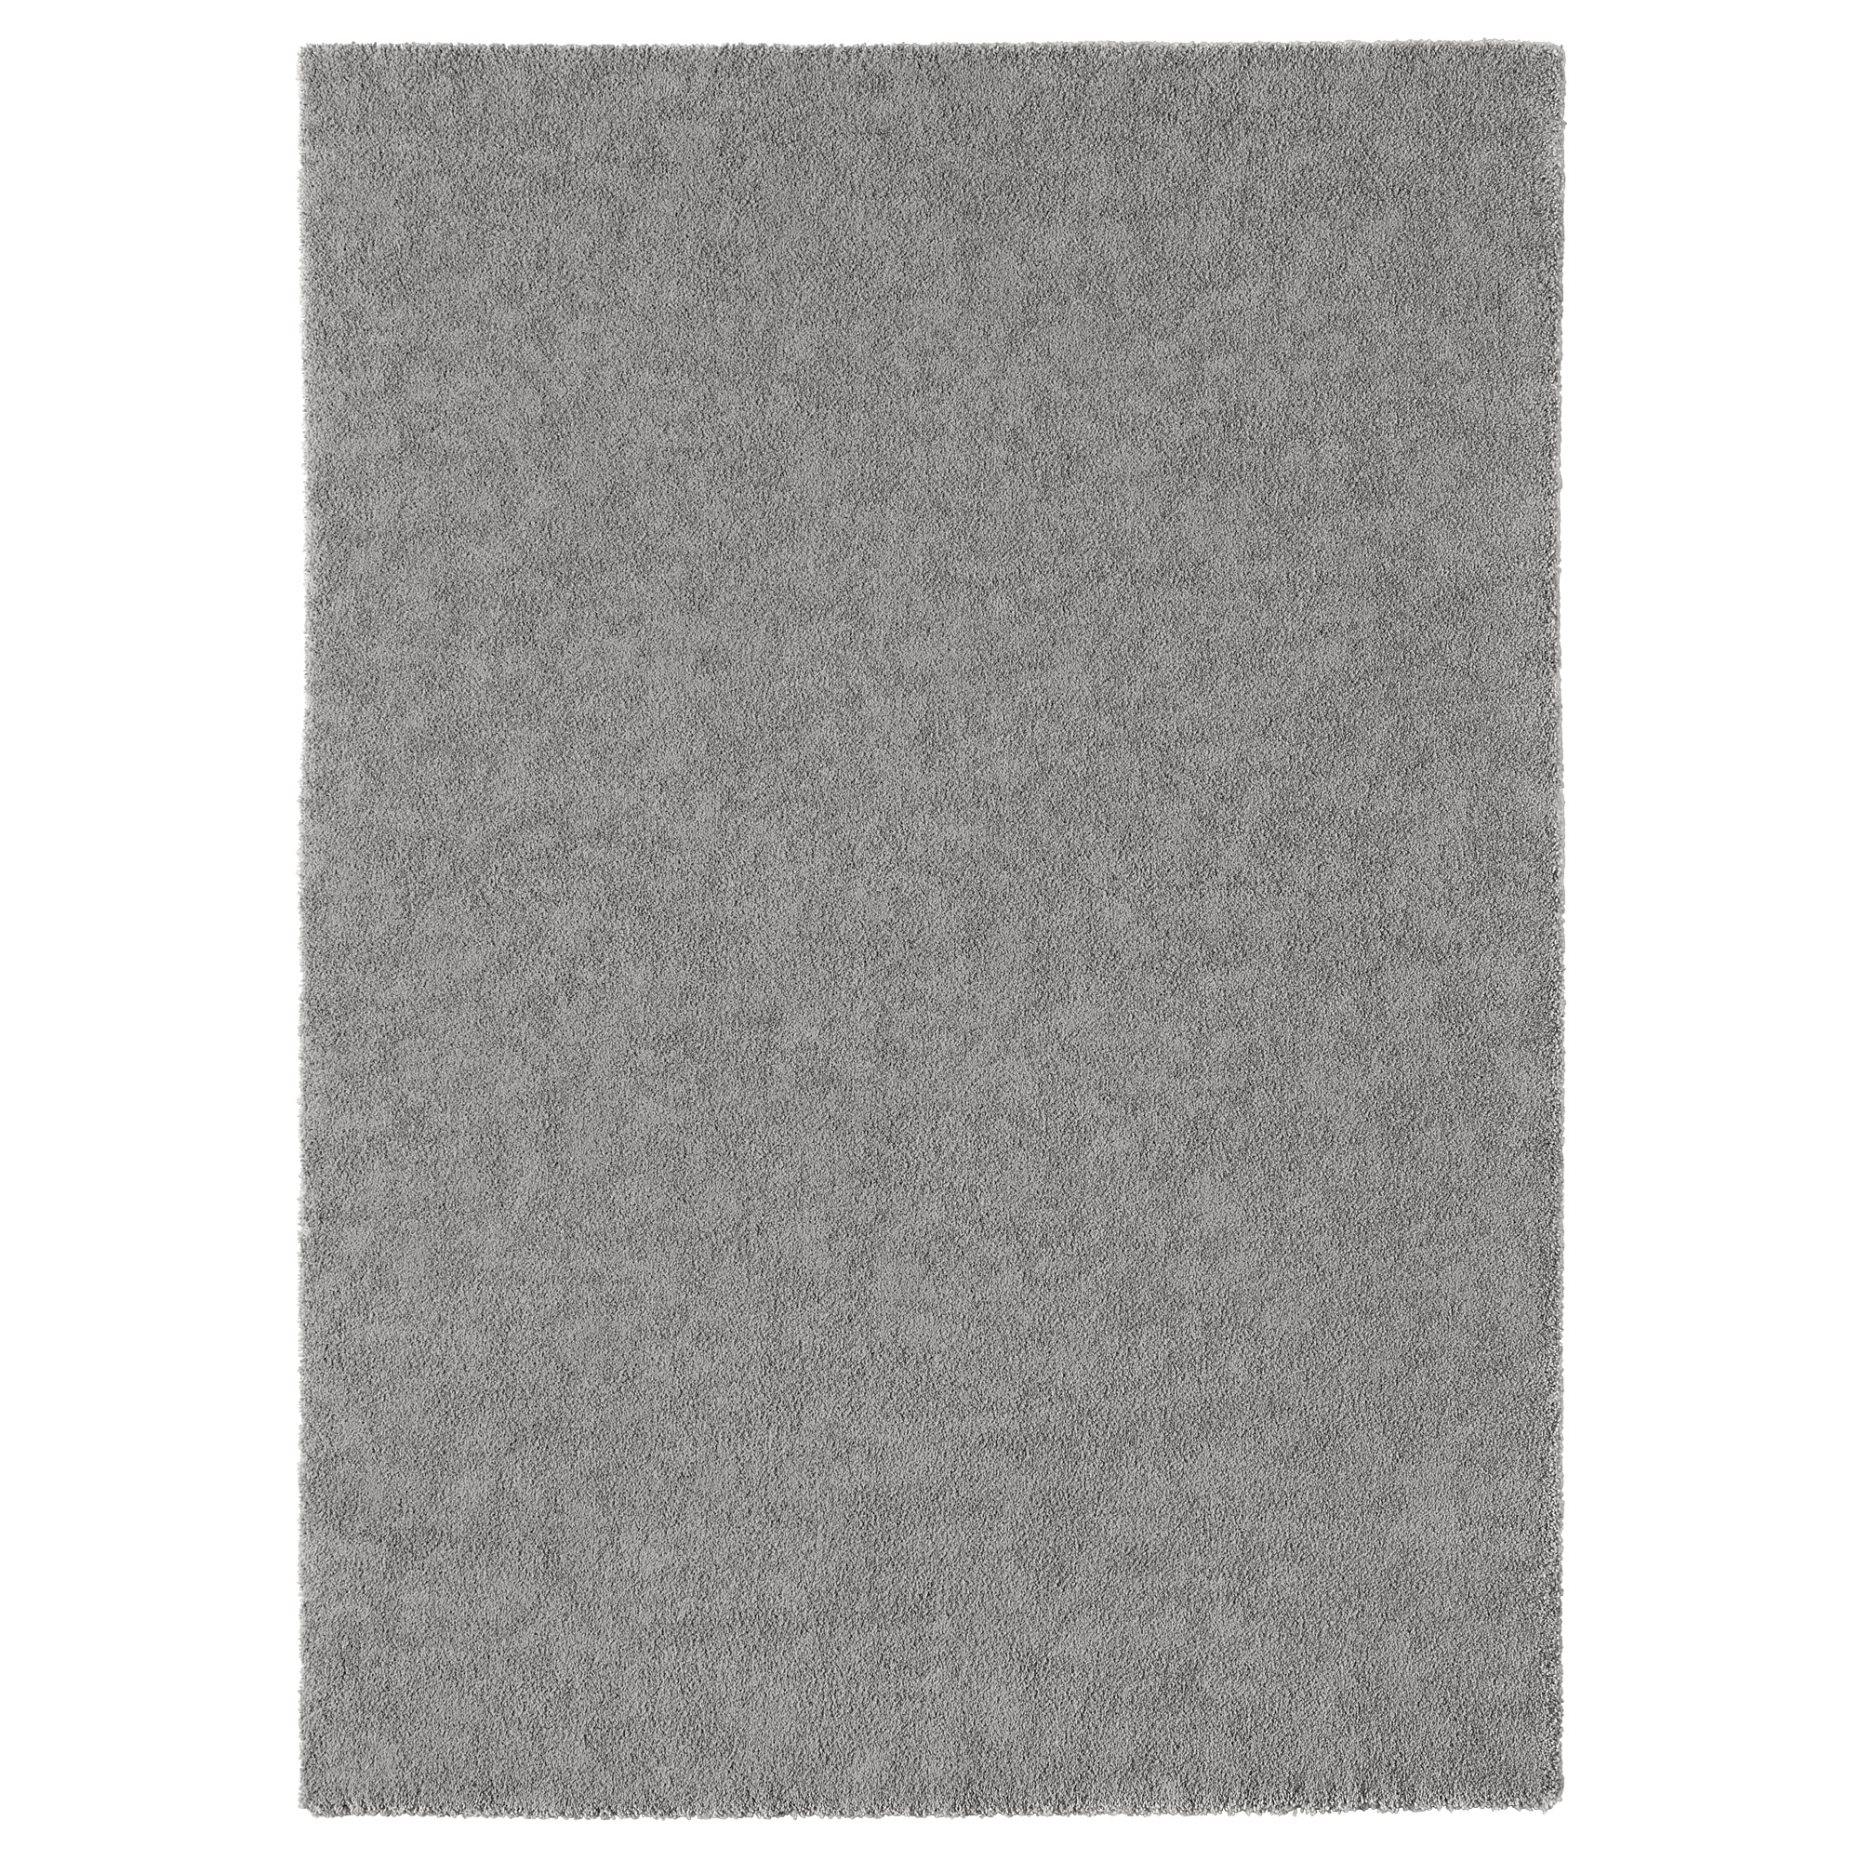 STOENSE, rug low pile, 170x240 cm, 004.268.28